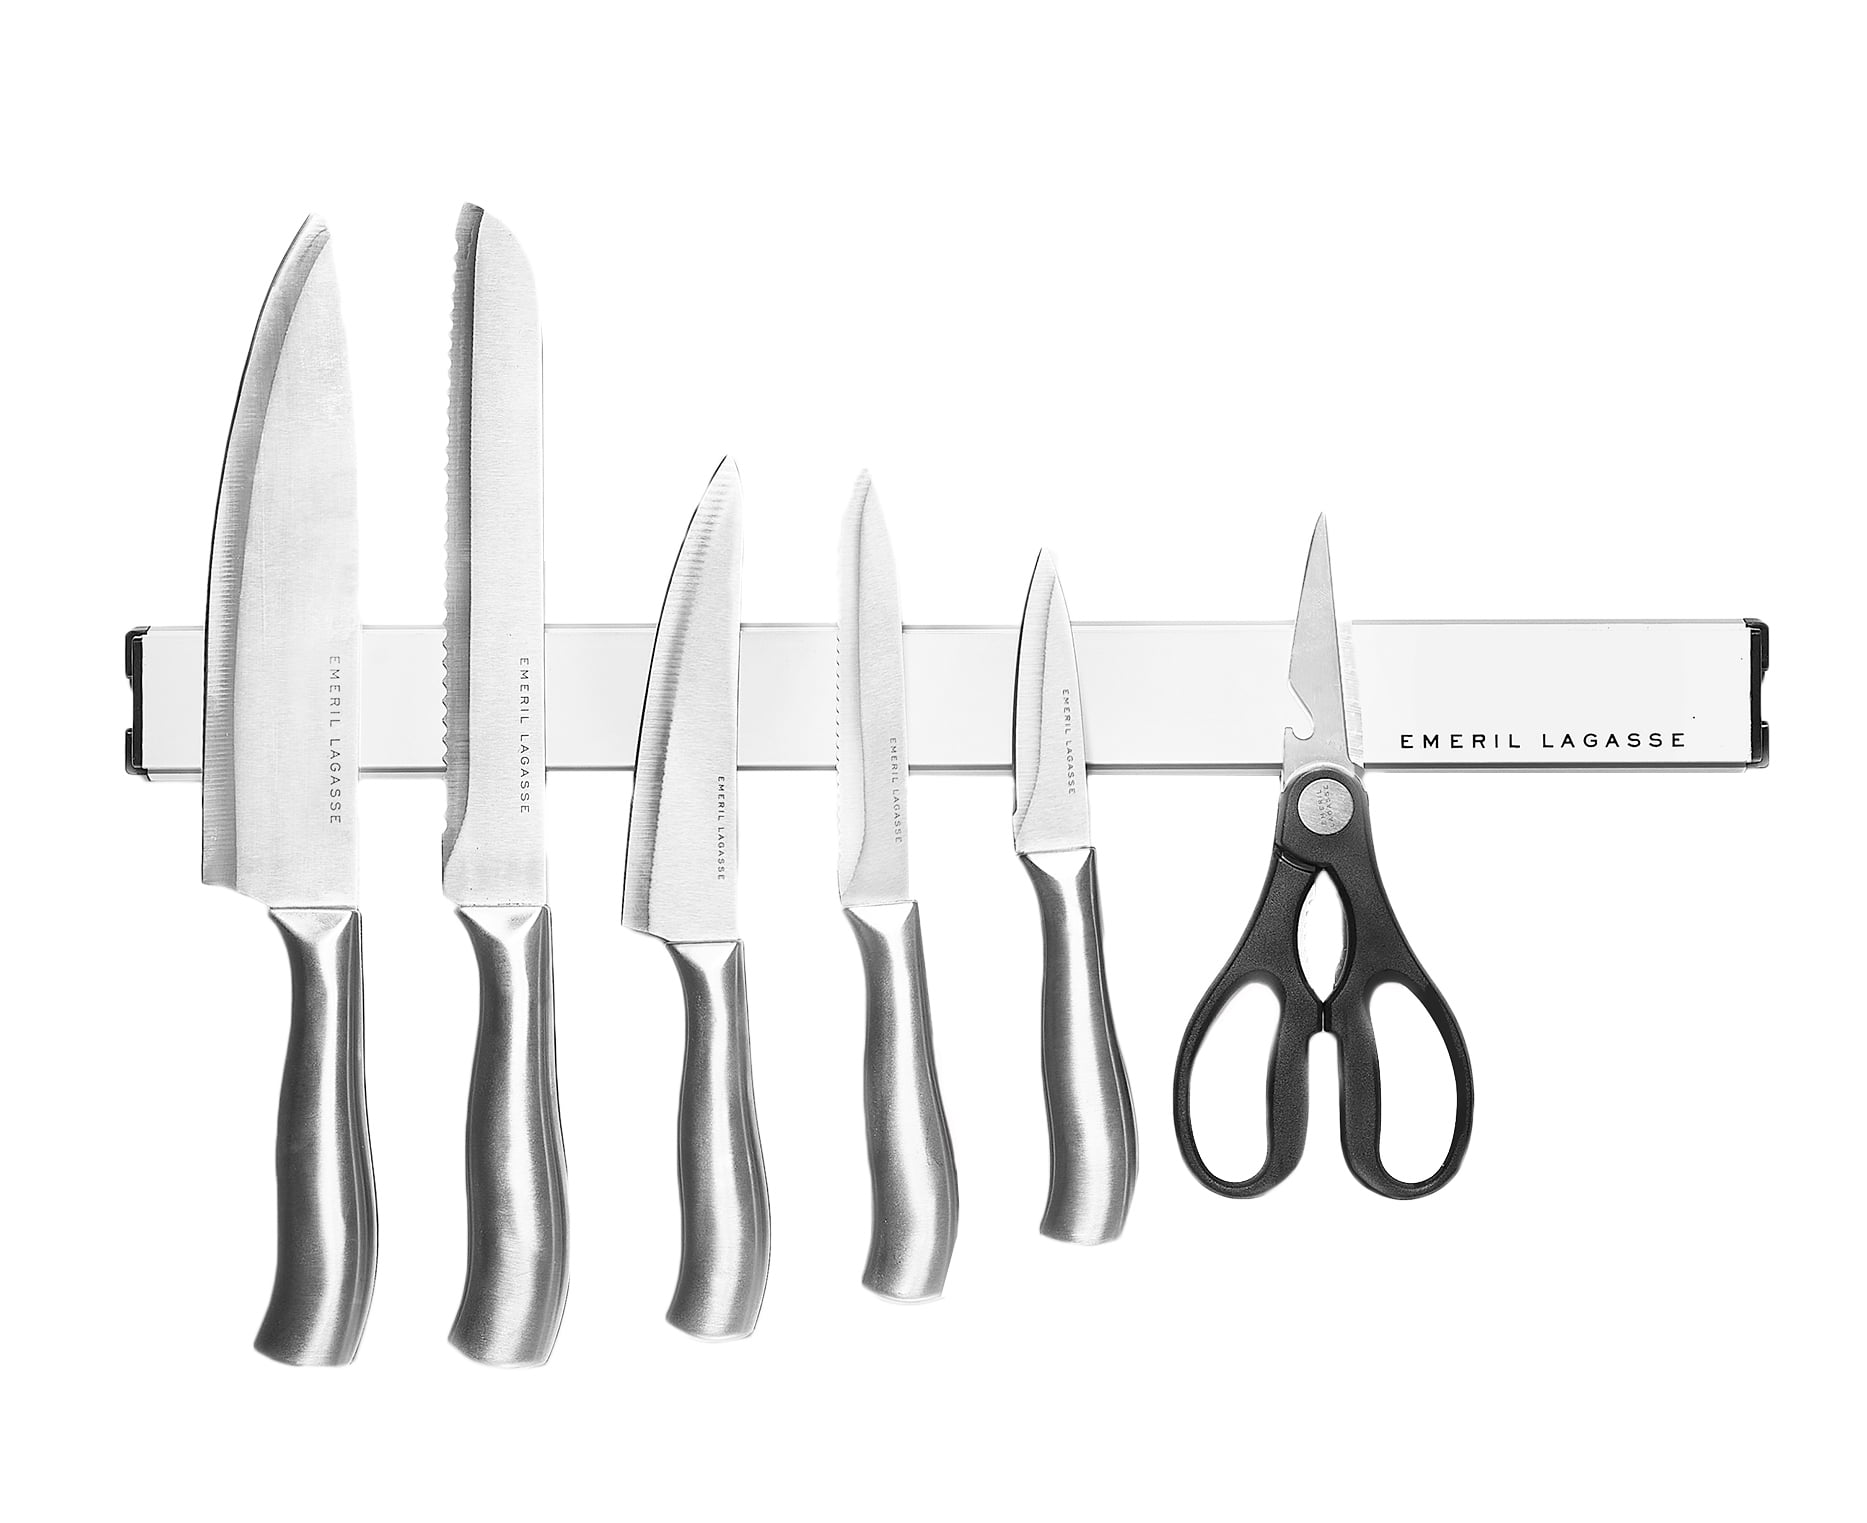 Emeril Lagasse 6 Piece Stainless Steel Knife Block Set 4 Knives